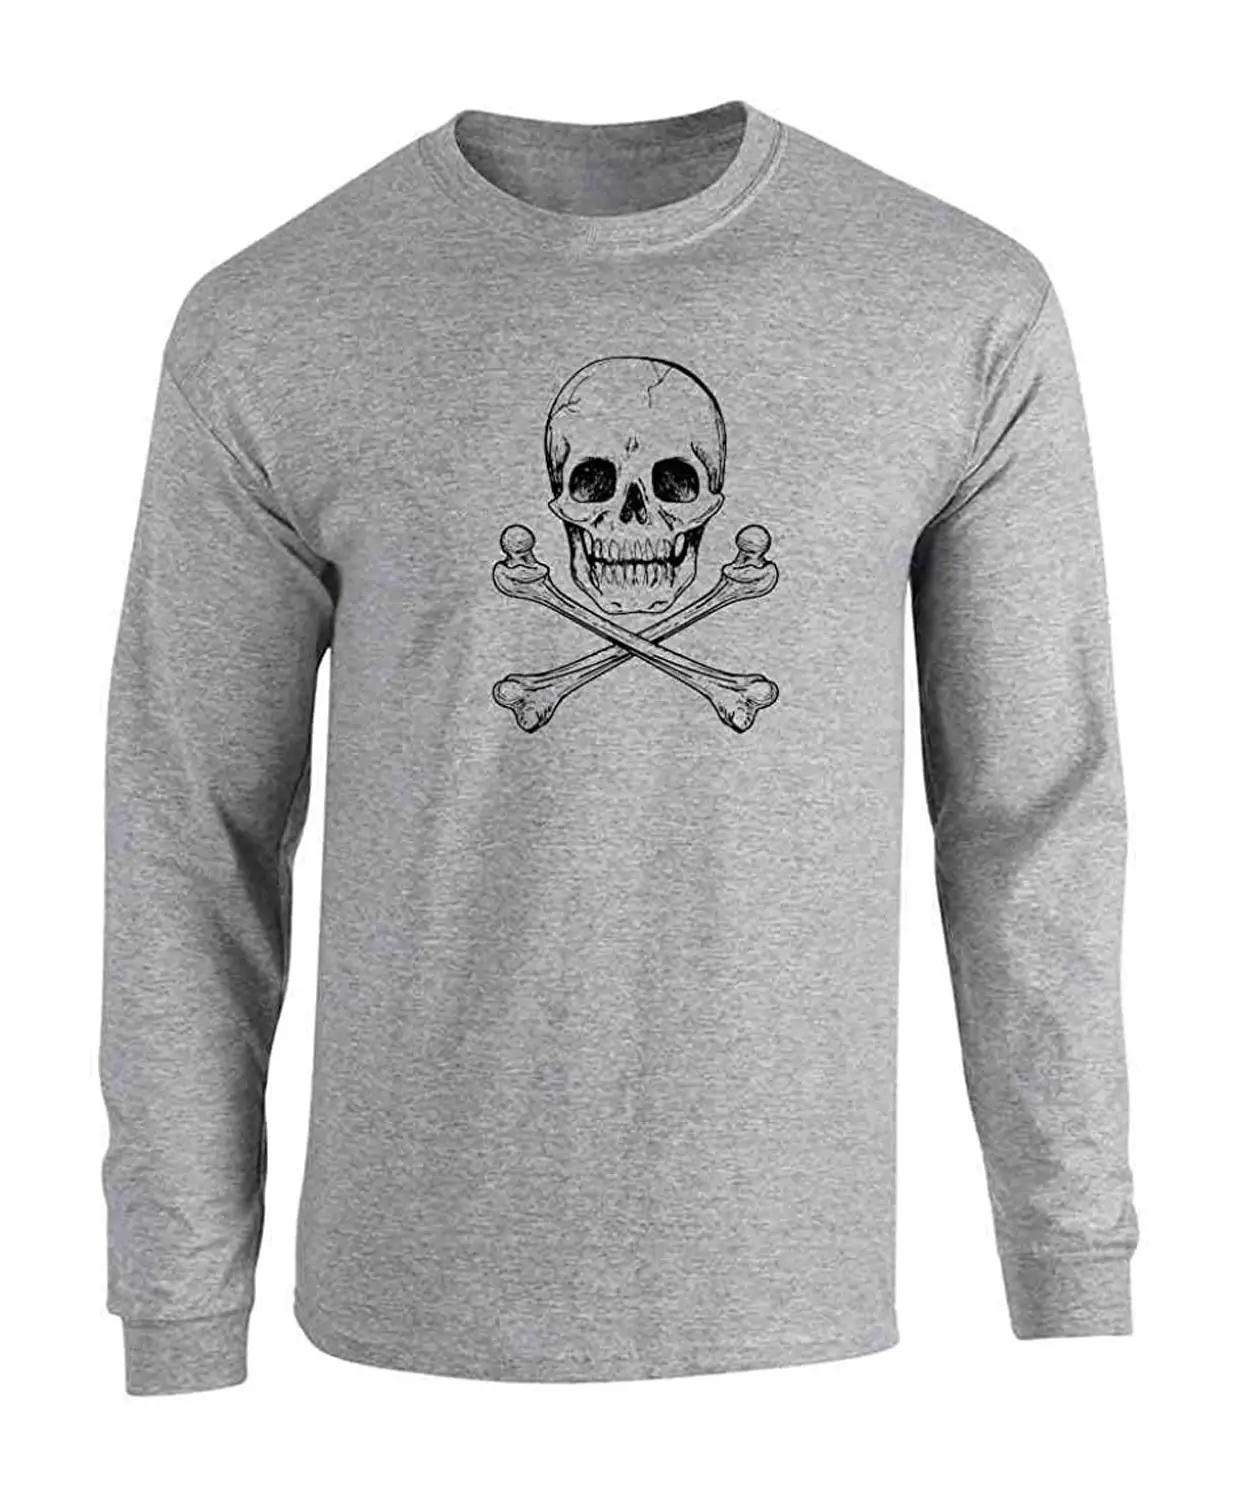 Skull and Cross Bones Classic Horror Halloween Full Long Sleeve Tee T-Shirt